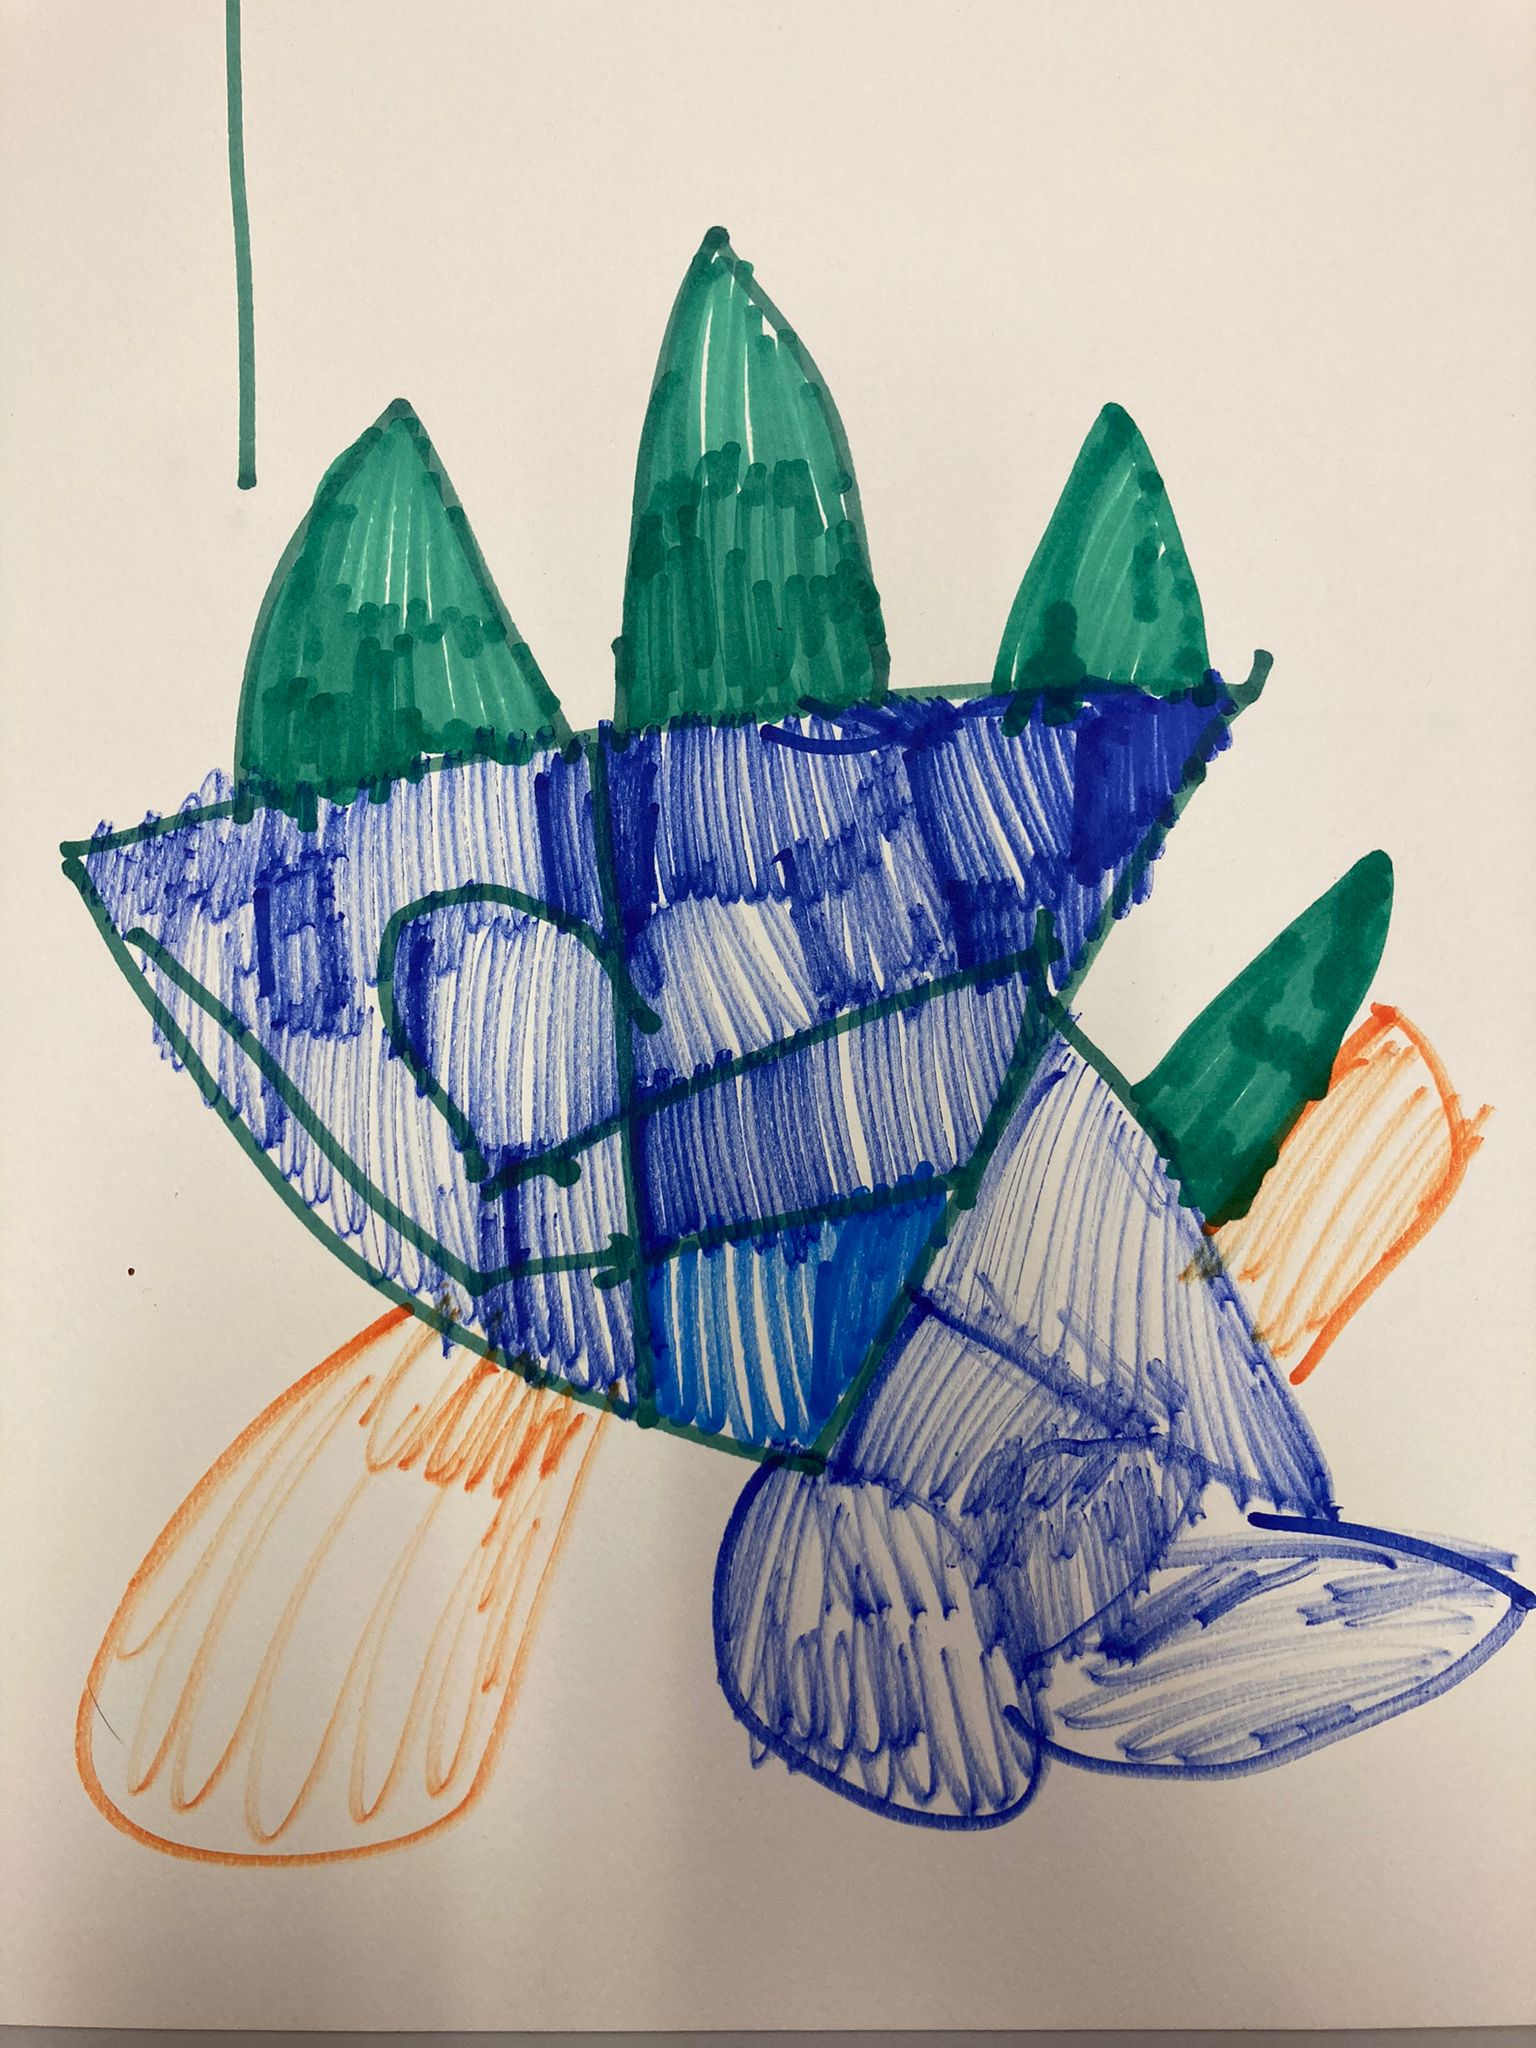 A blue fish